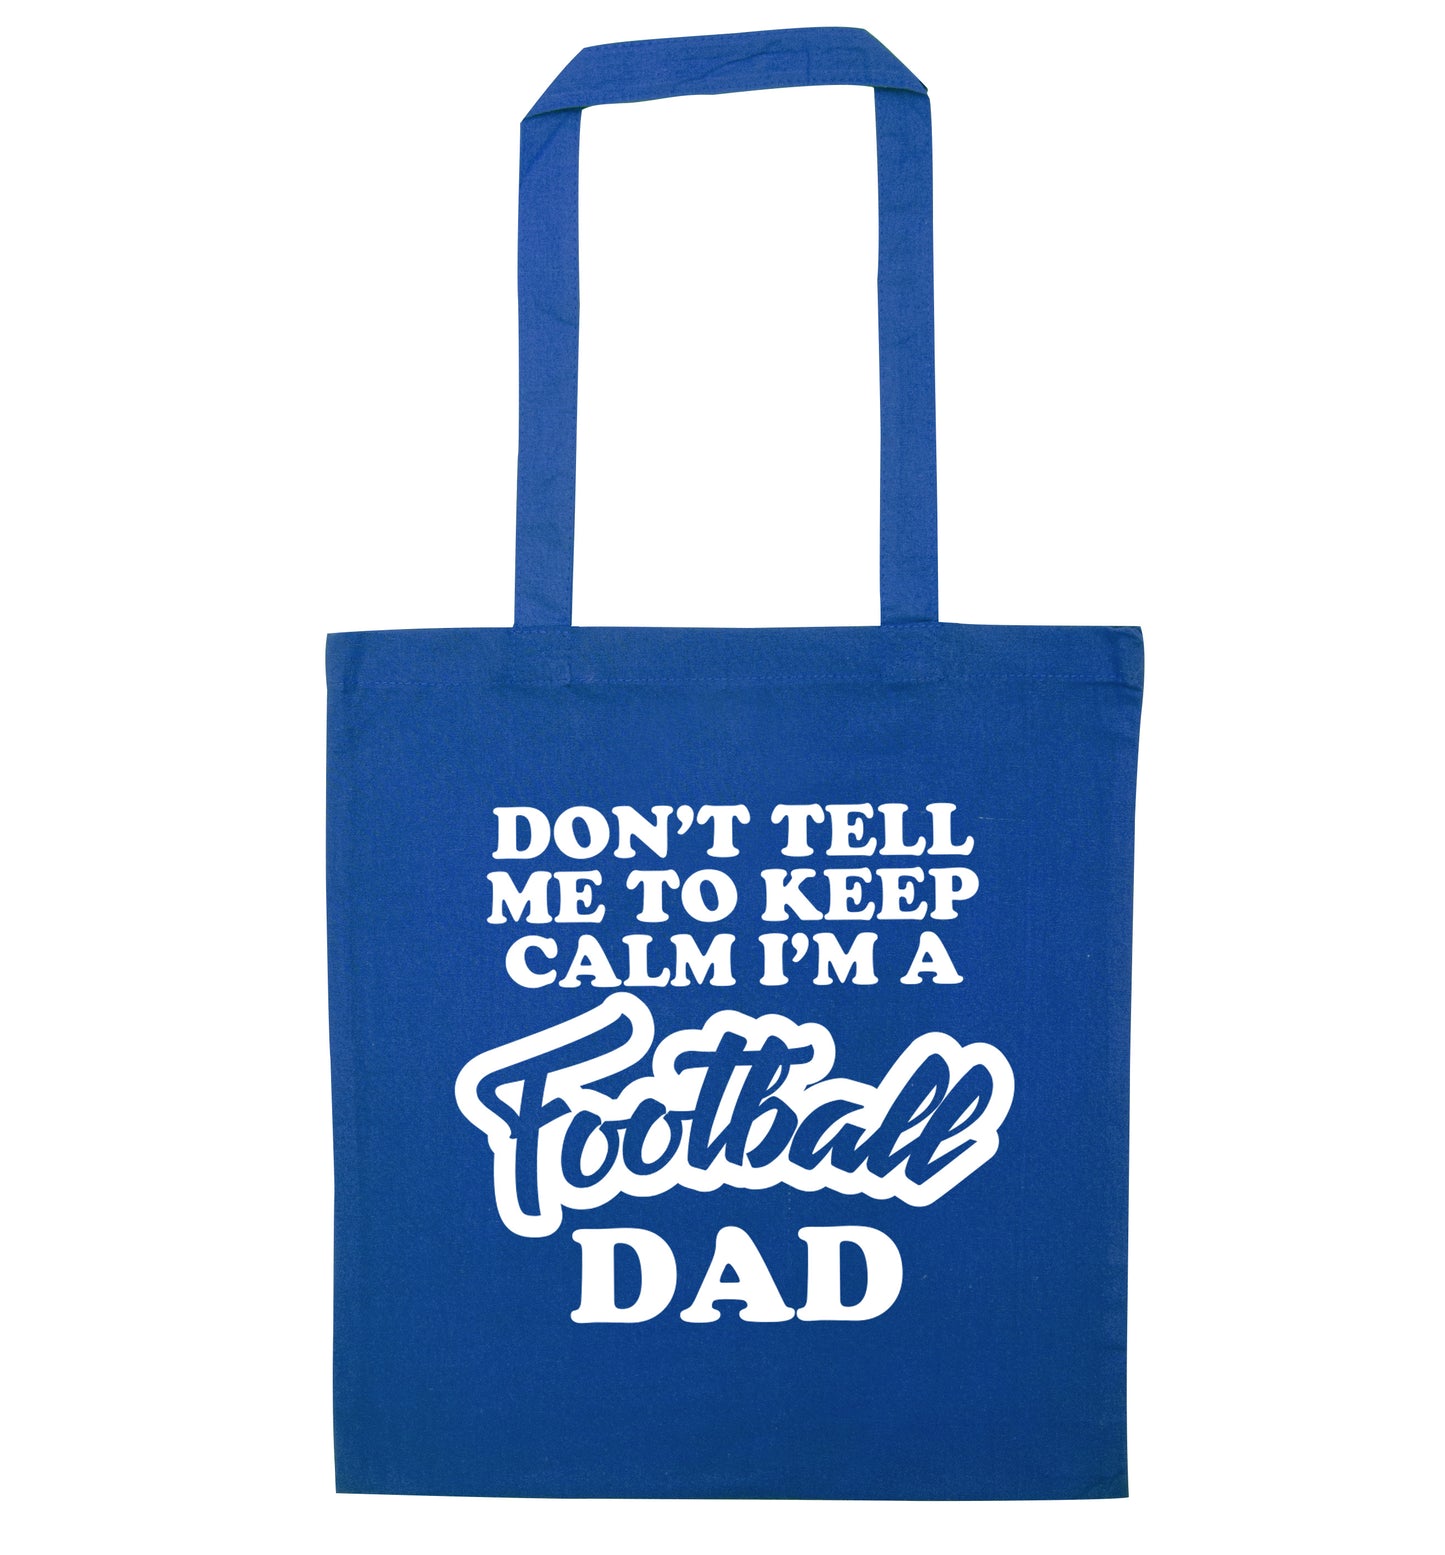 Don't tell me to keep calm I'm a football grandad blue tote bag